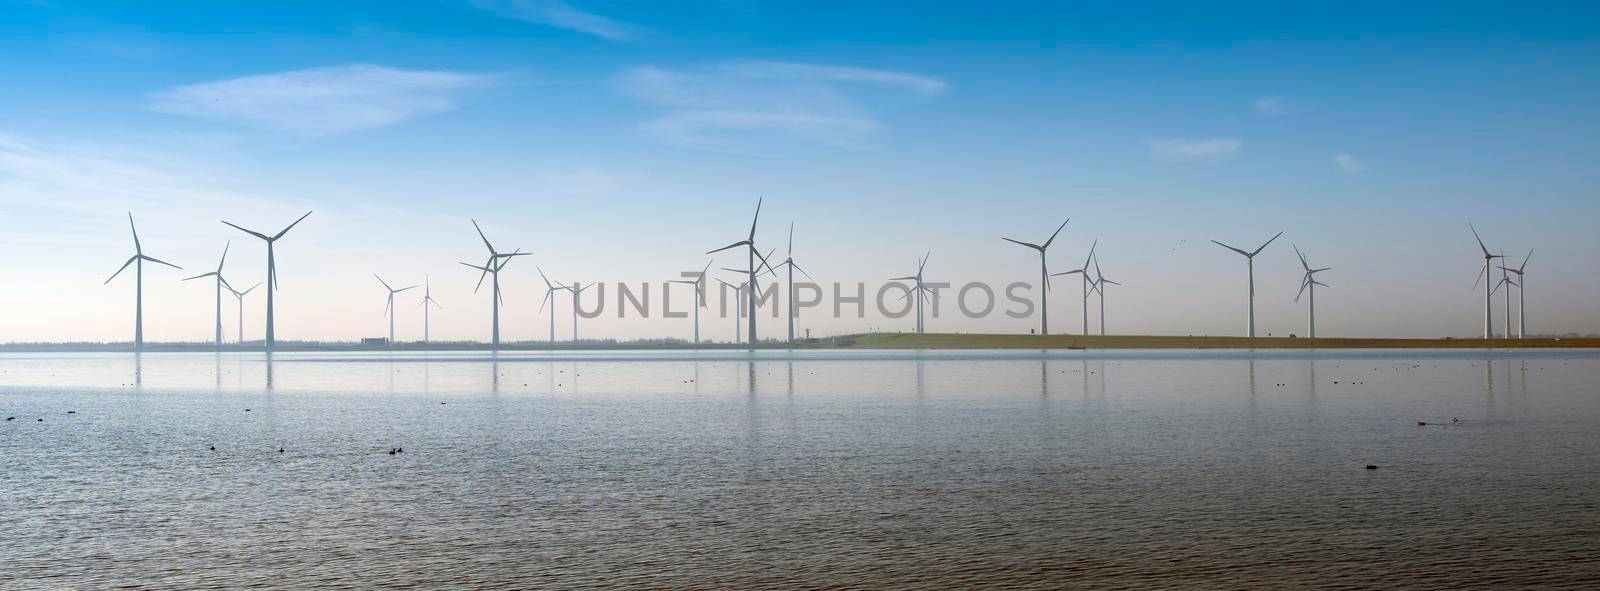 wind turbines under blue sky on philipsdam in dutch province of Zeeland by ahavelaar